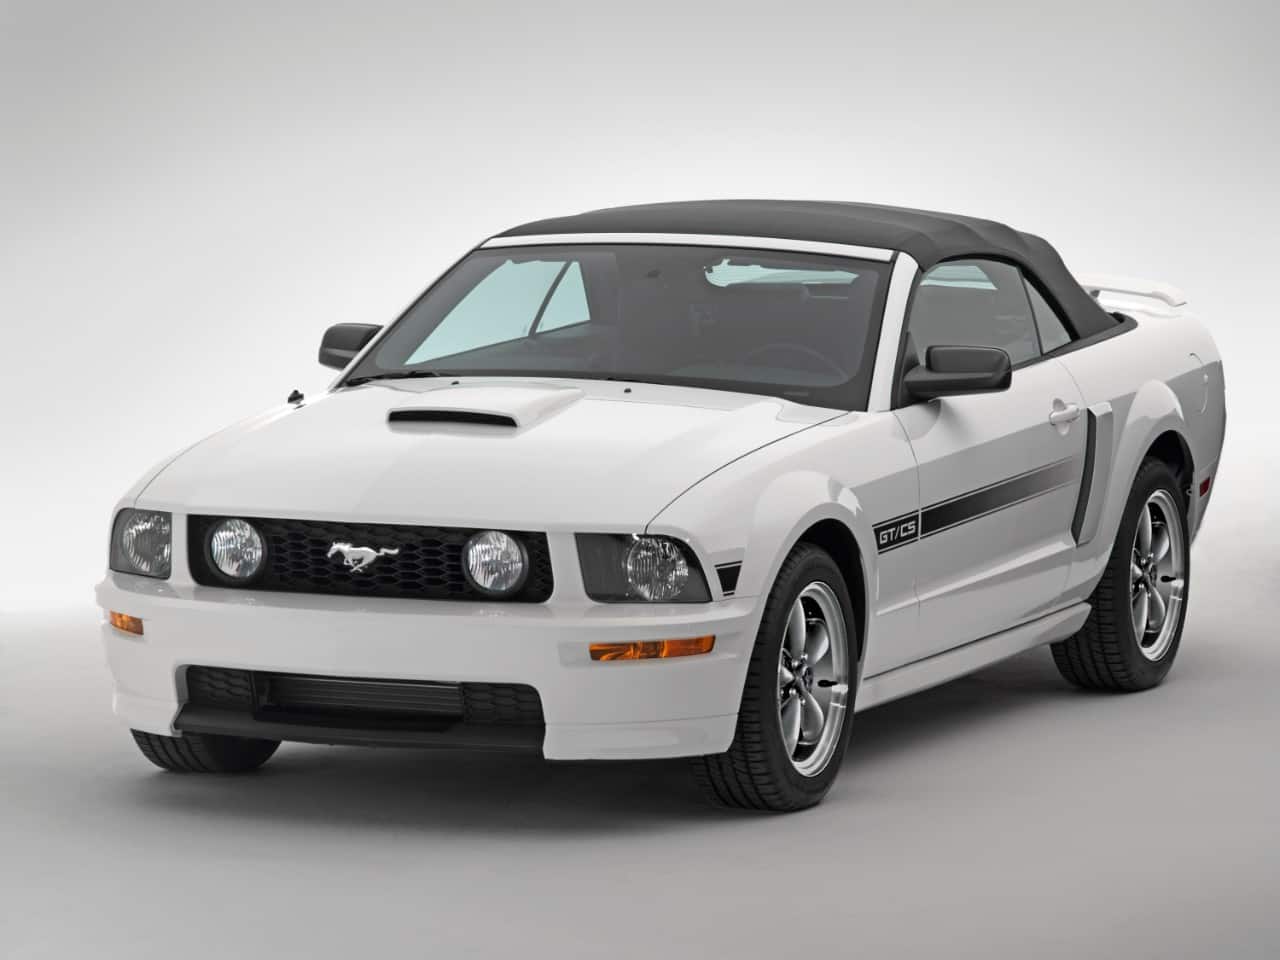 2007 Mustang GT "California Special"